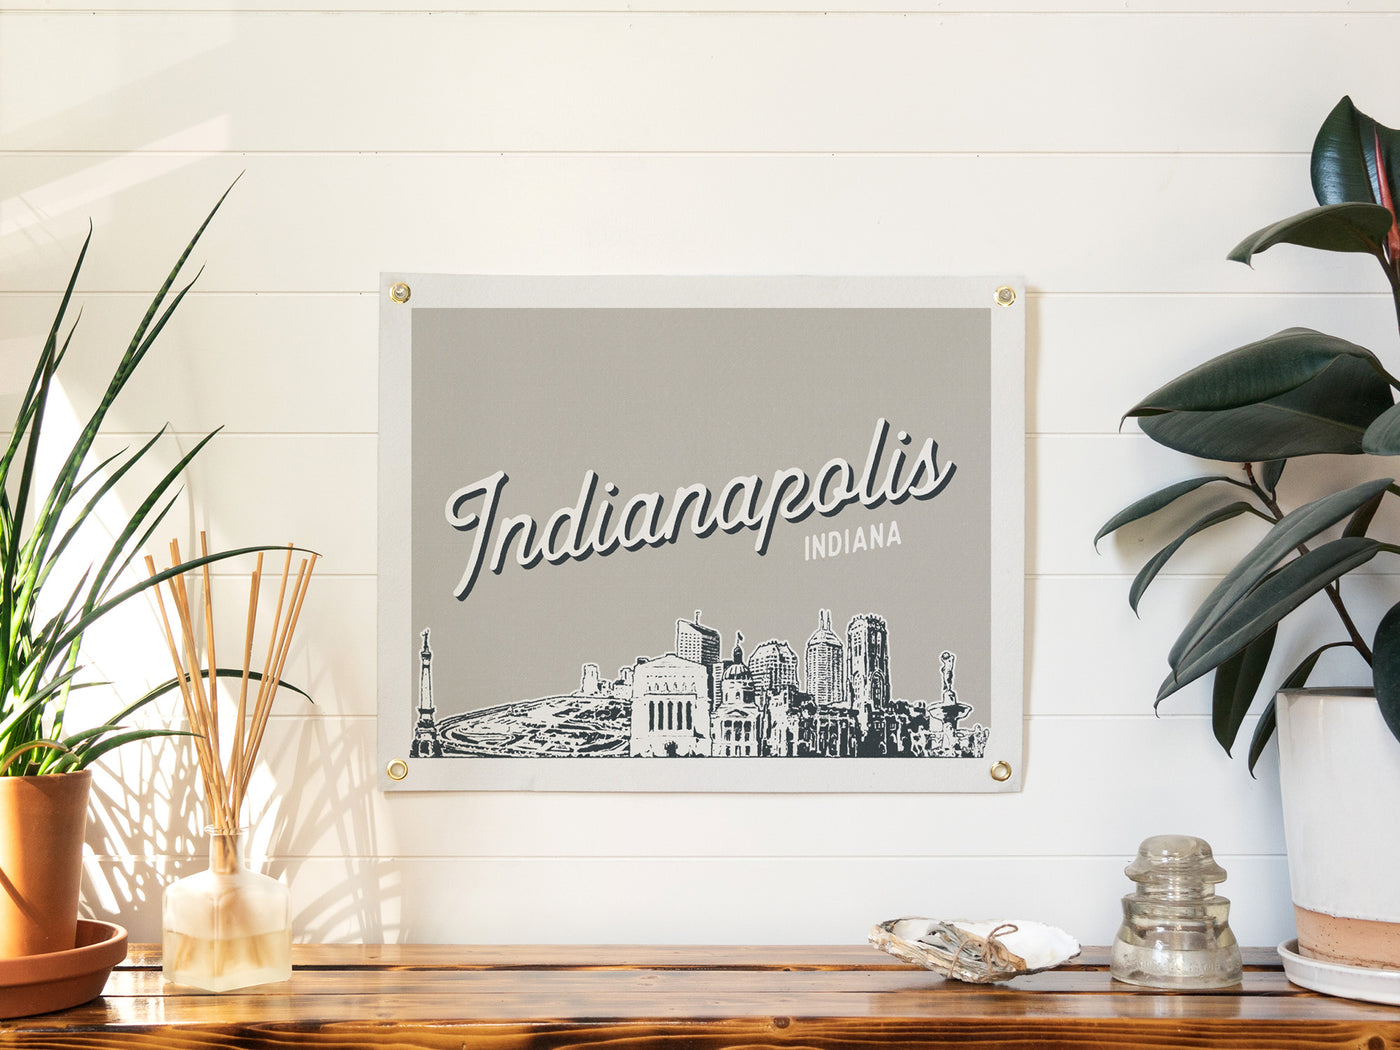 Indianapolis, Indiana City Felt Banner